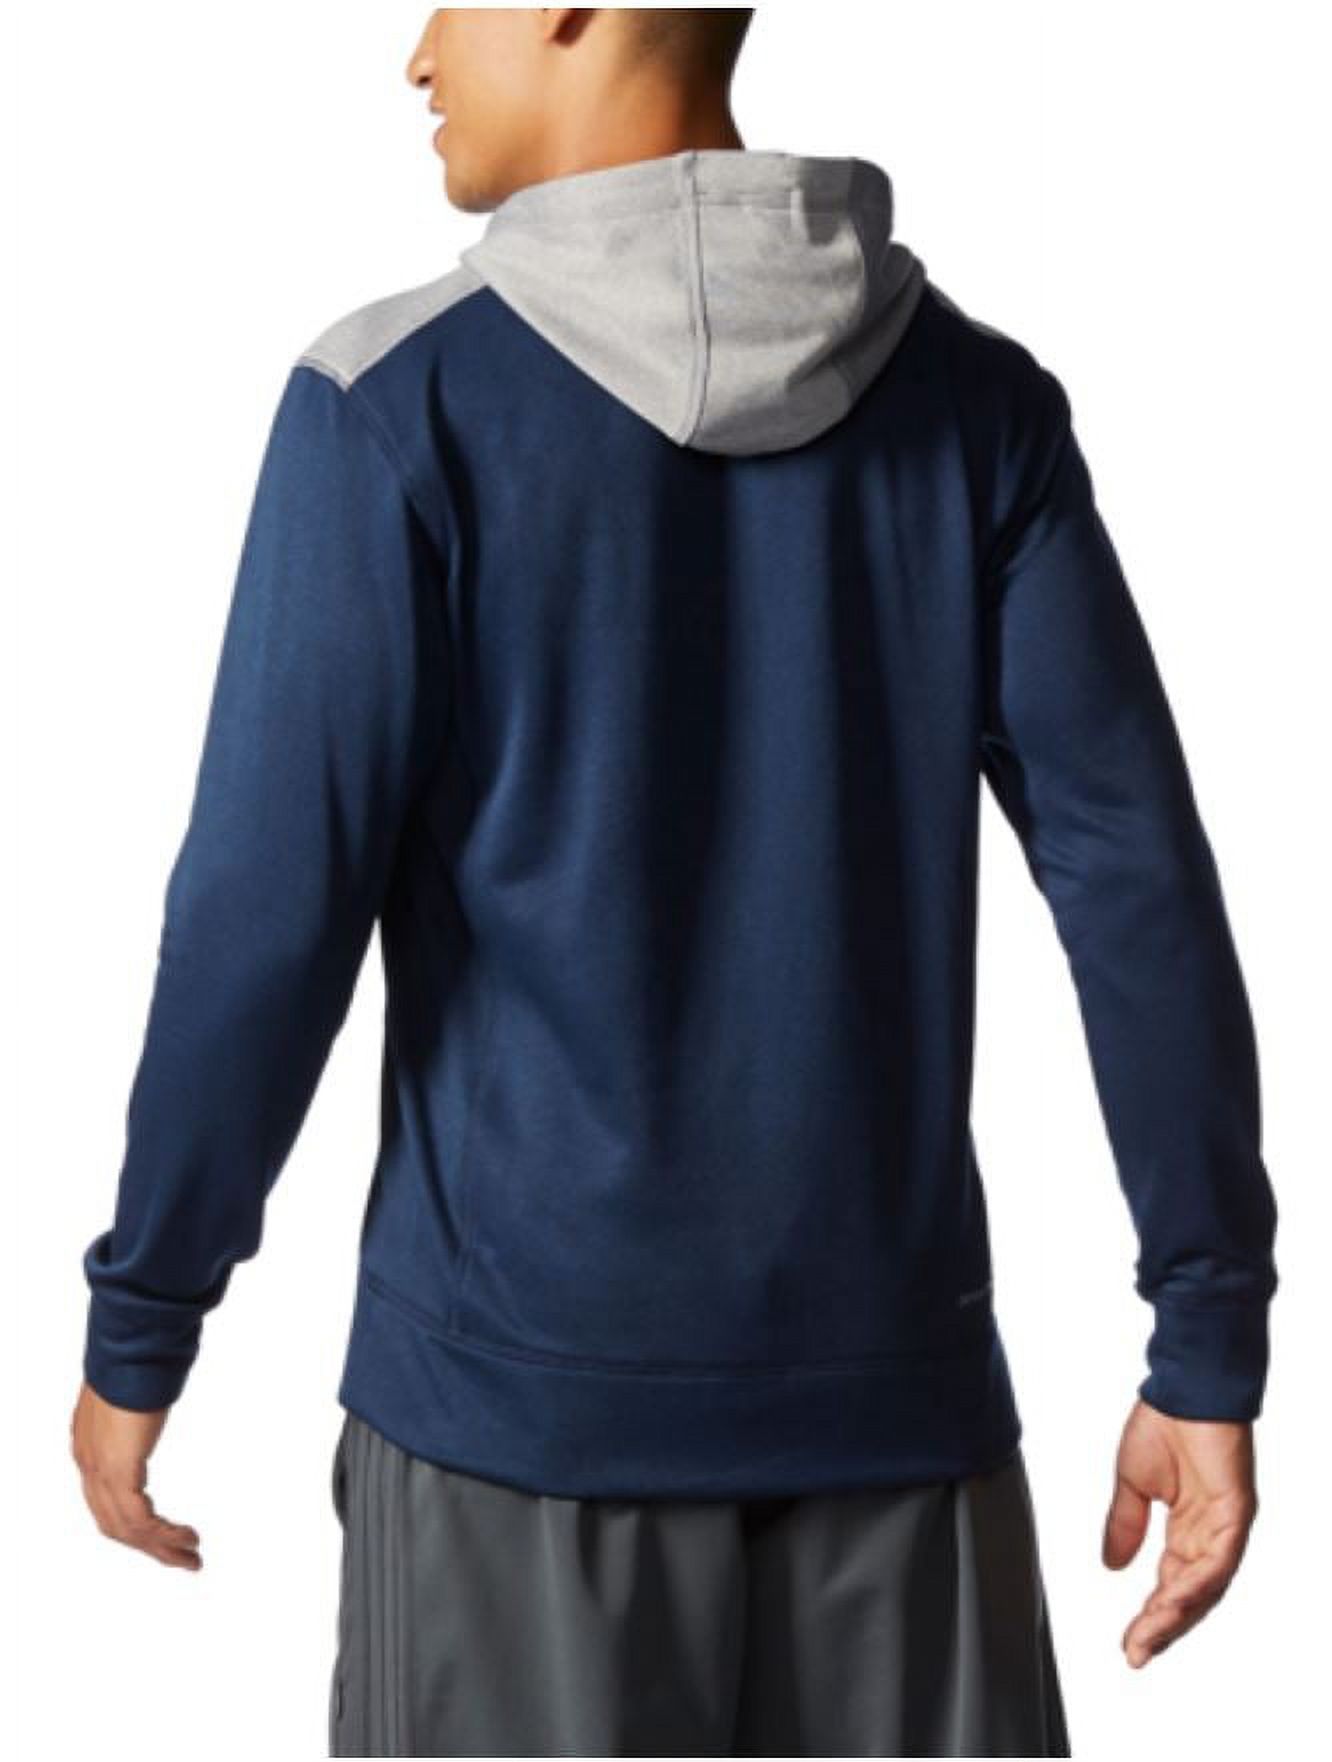 Adidas Mens Climawarm Tech Fleece Pullover Hoodie Sweatshirt - image 2 of 4